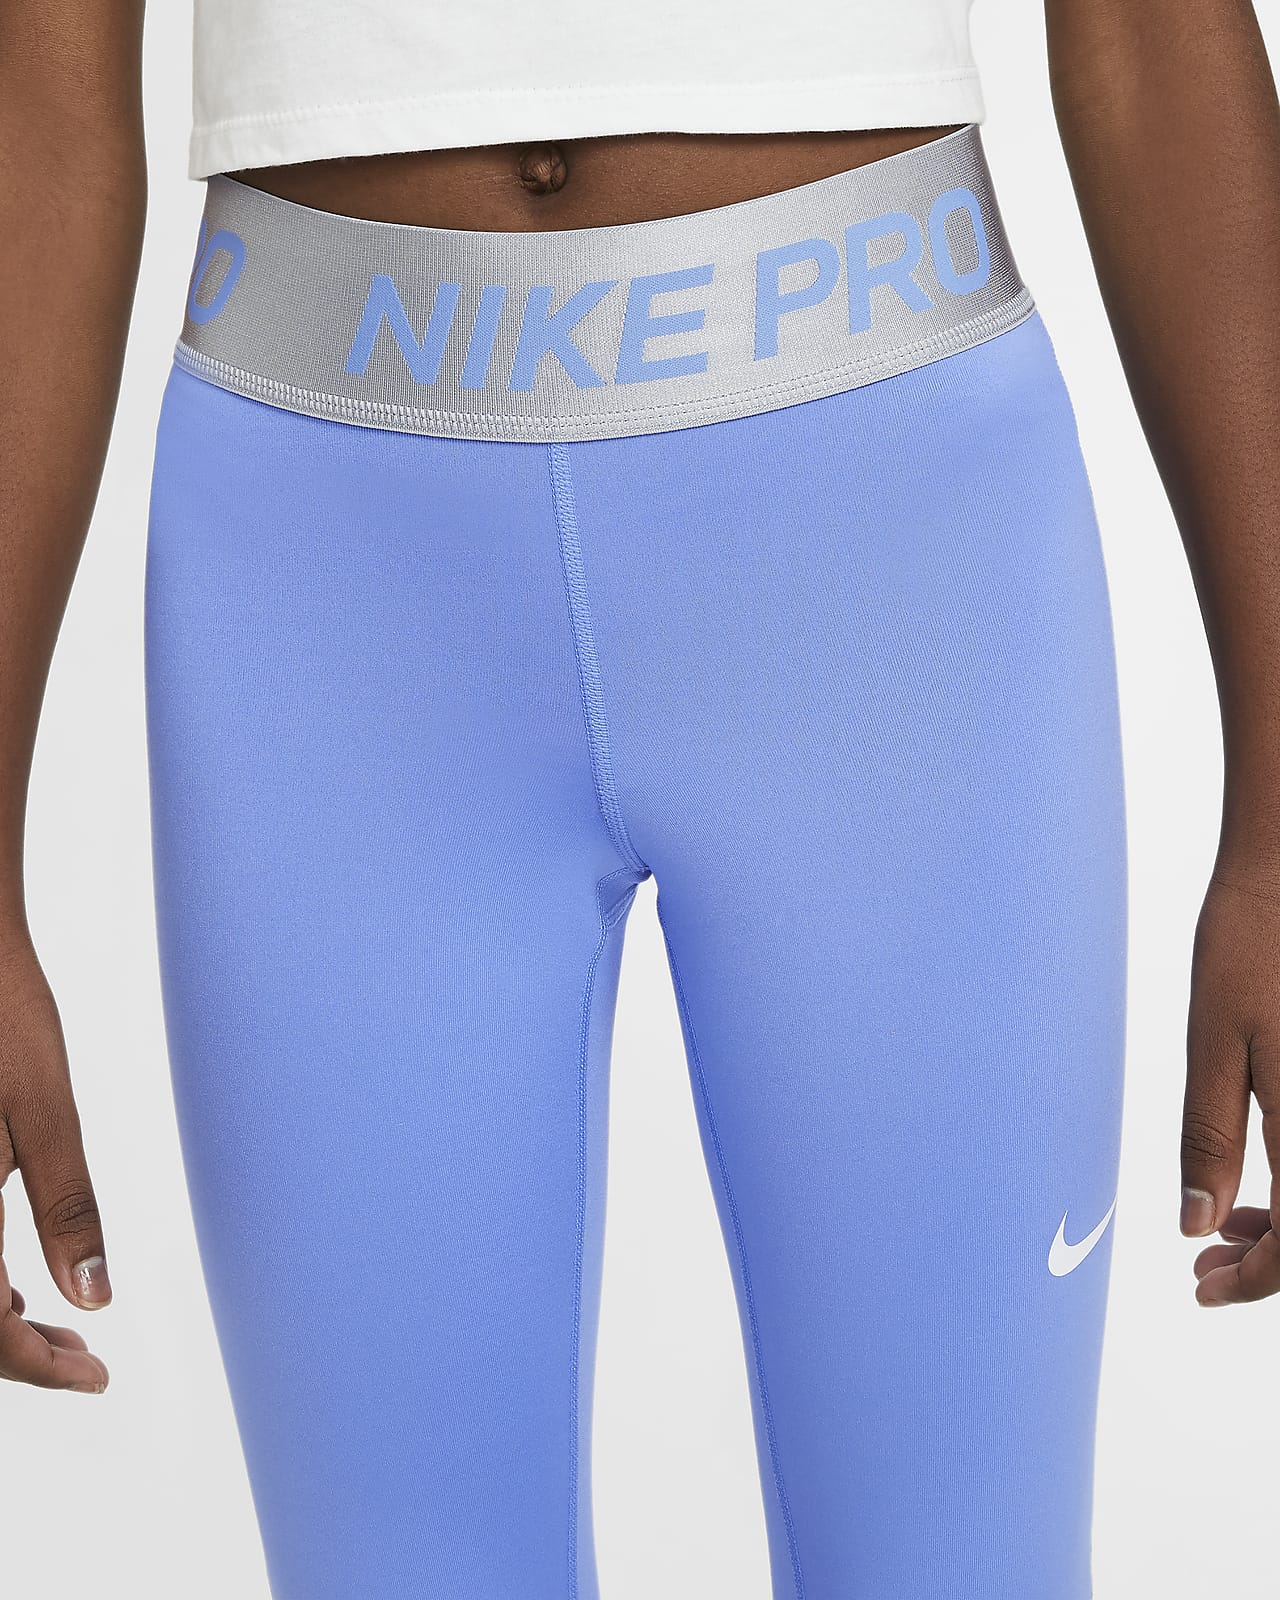 blue nike pro leggings